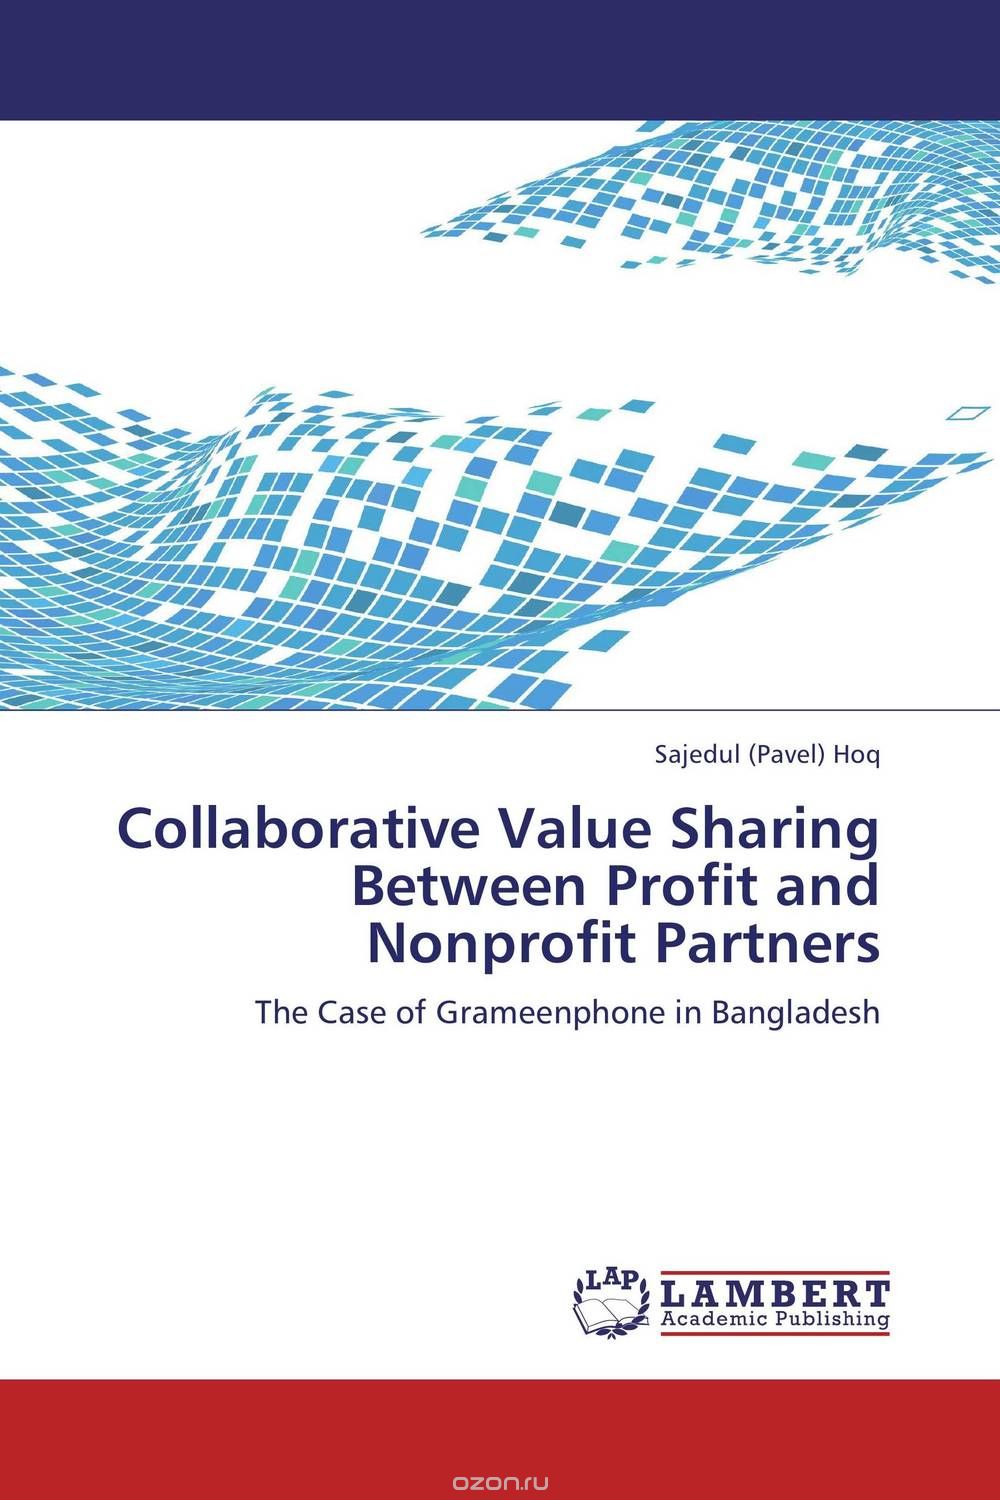 Скачать книгу "Collaborative Value Sharing Between Profit and Nonprofit Partners"